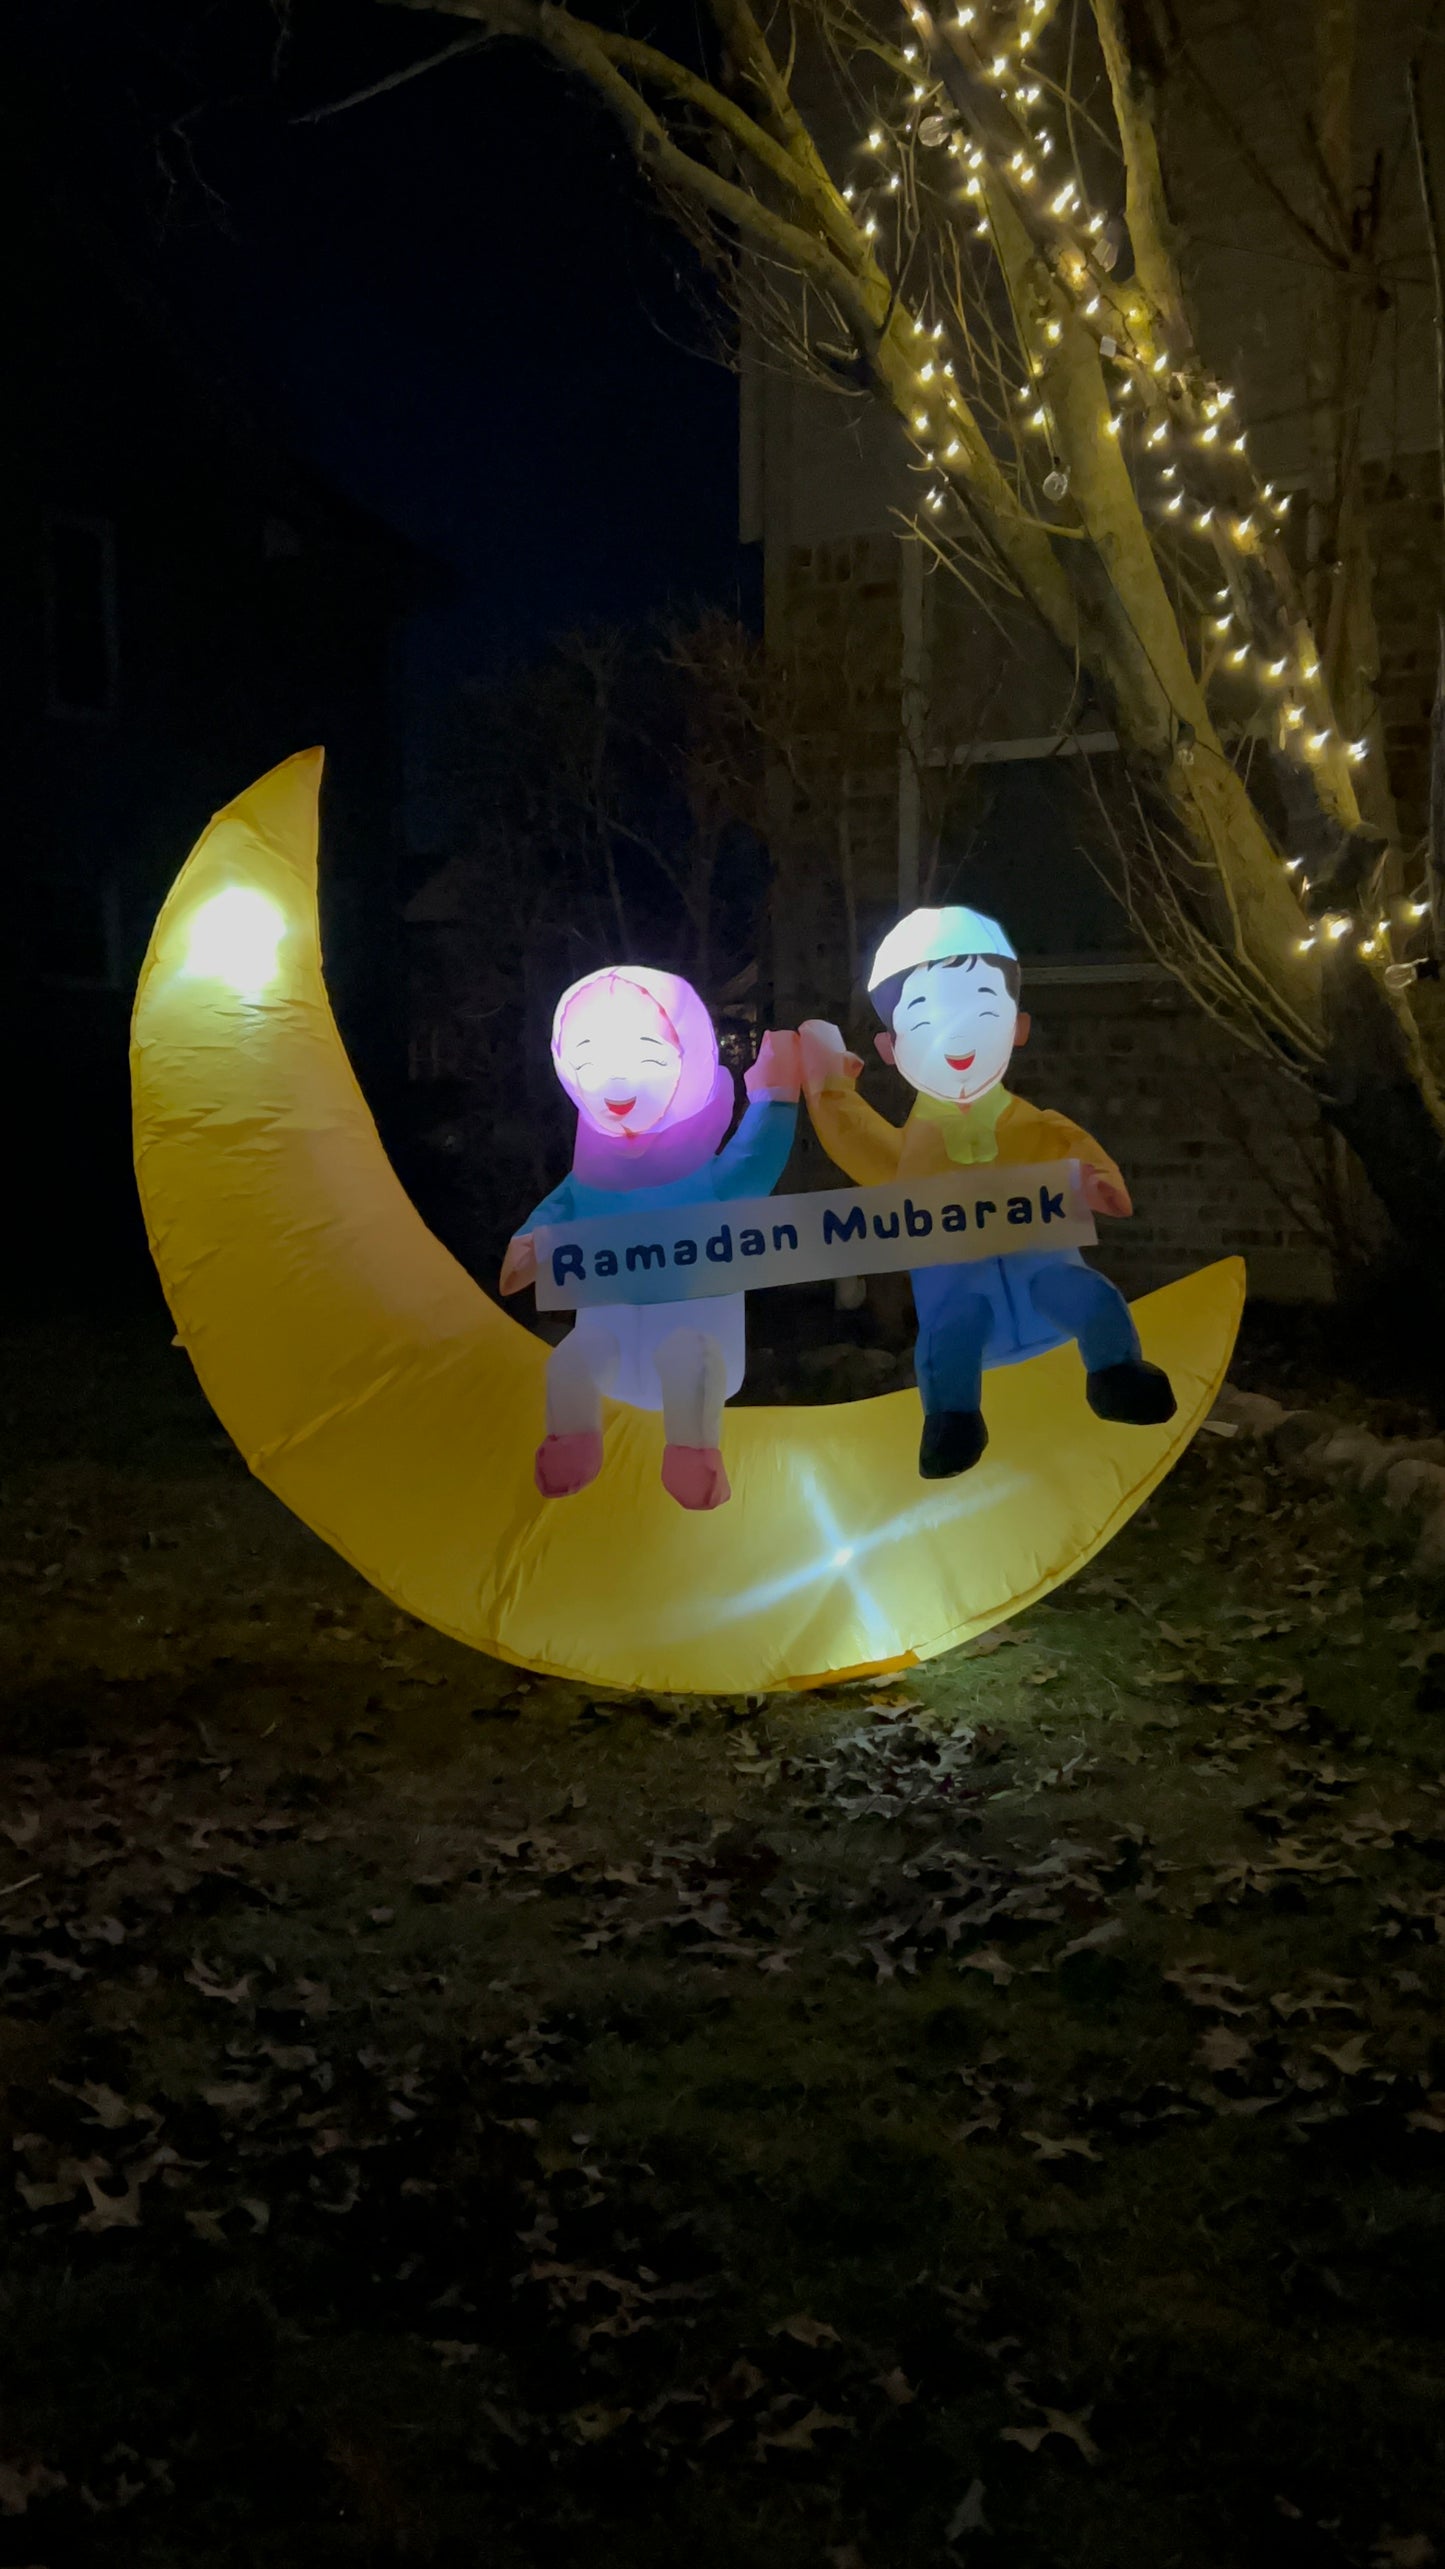 5FT Ramadan Inflatable - Kids on Crescent Moon